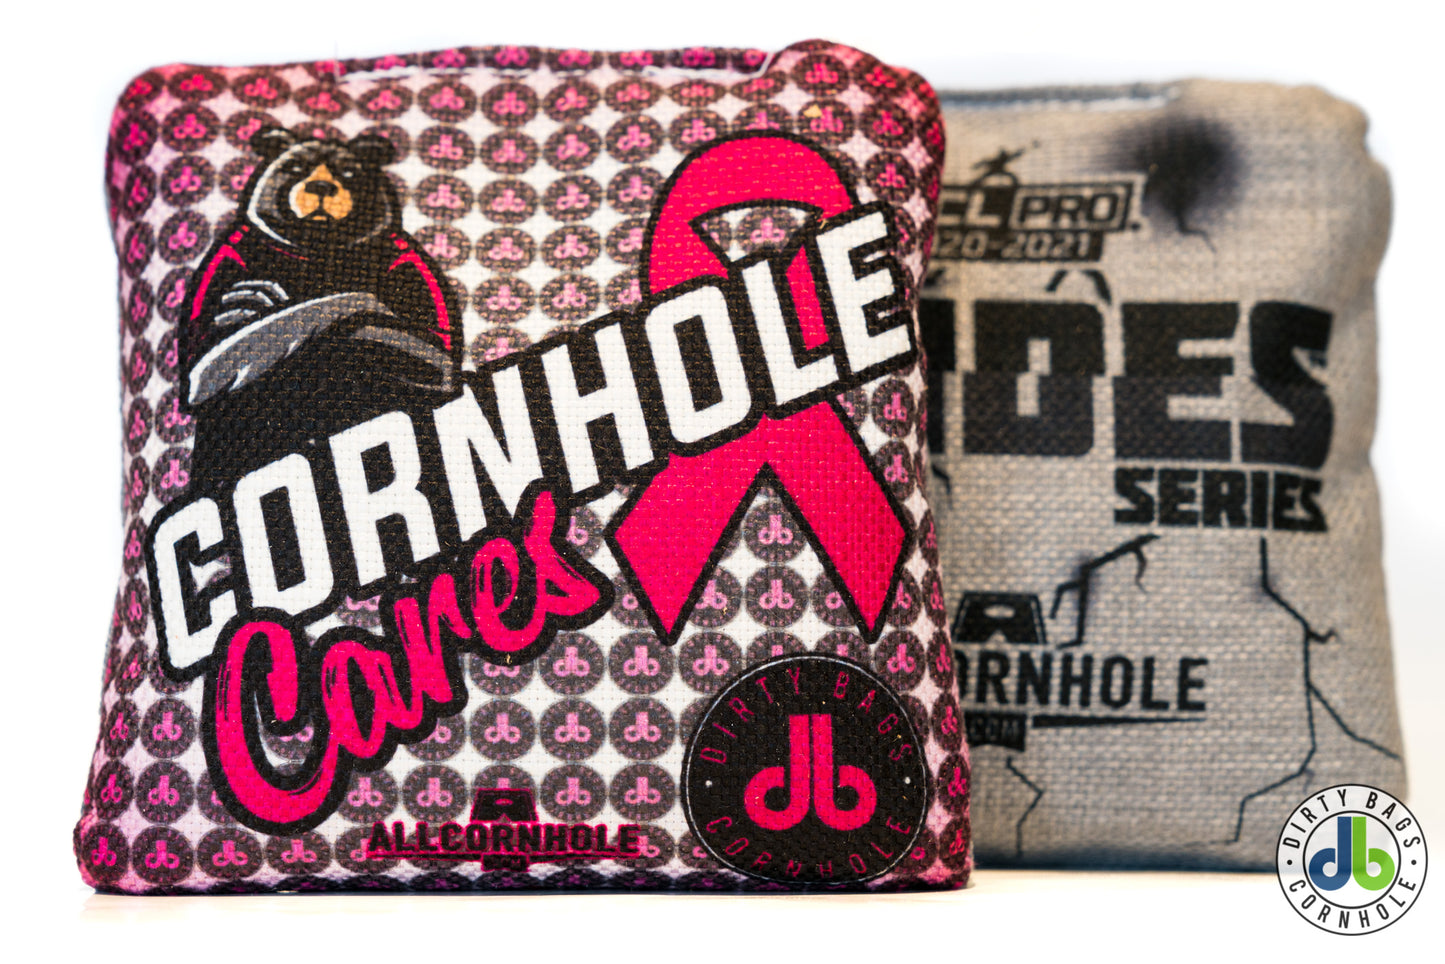 All Slides Cornhole Bags - BCAM Edition